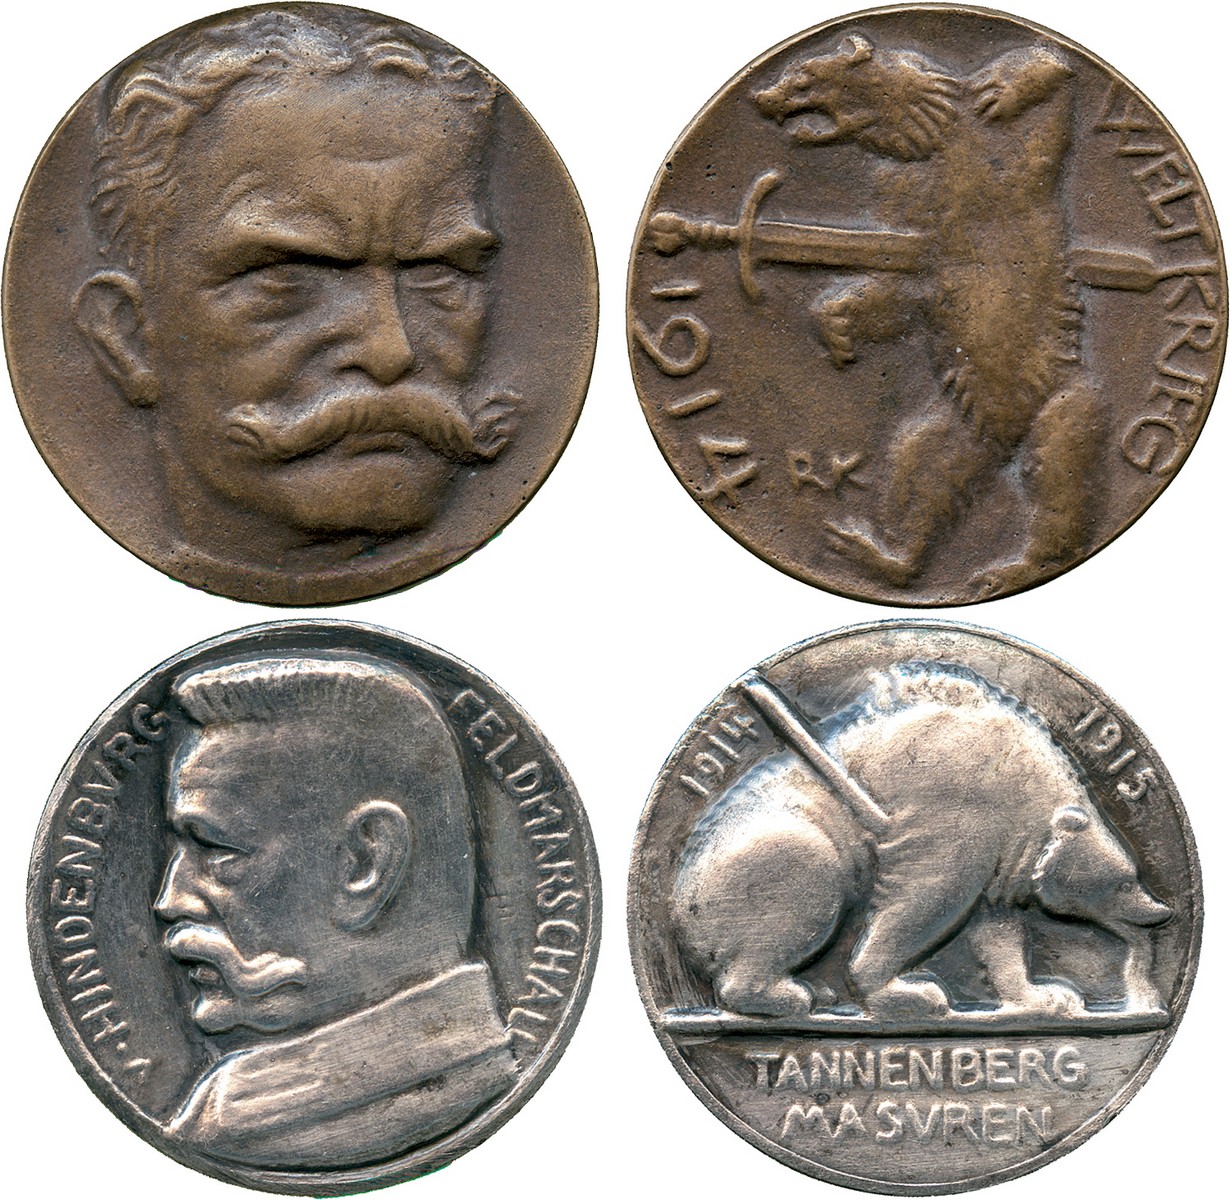 COMMEMORATIVE MEDALS, WORLD MEDALS, Medals of the Axis, Germany, Generalfeldmarschall August von